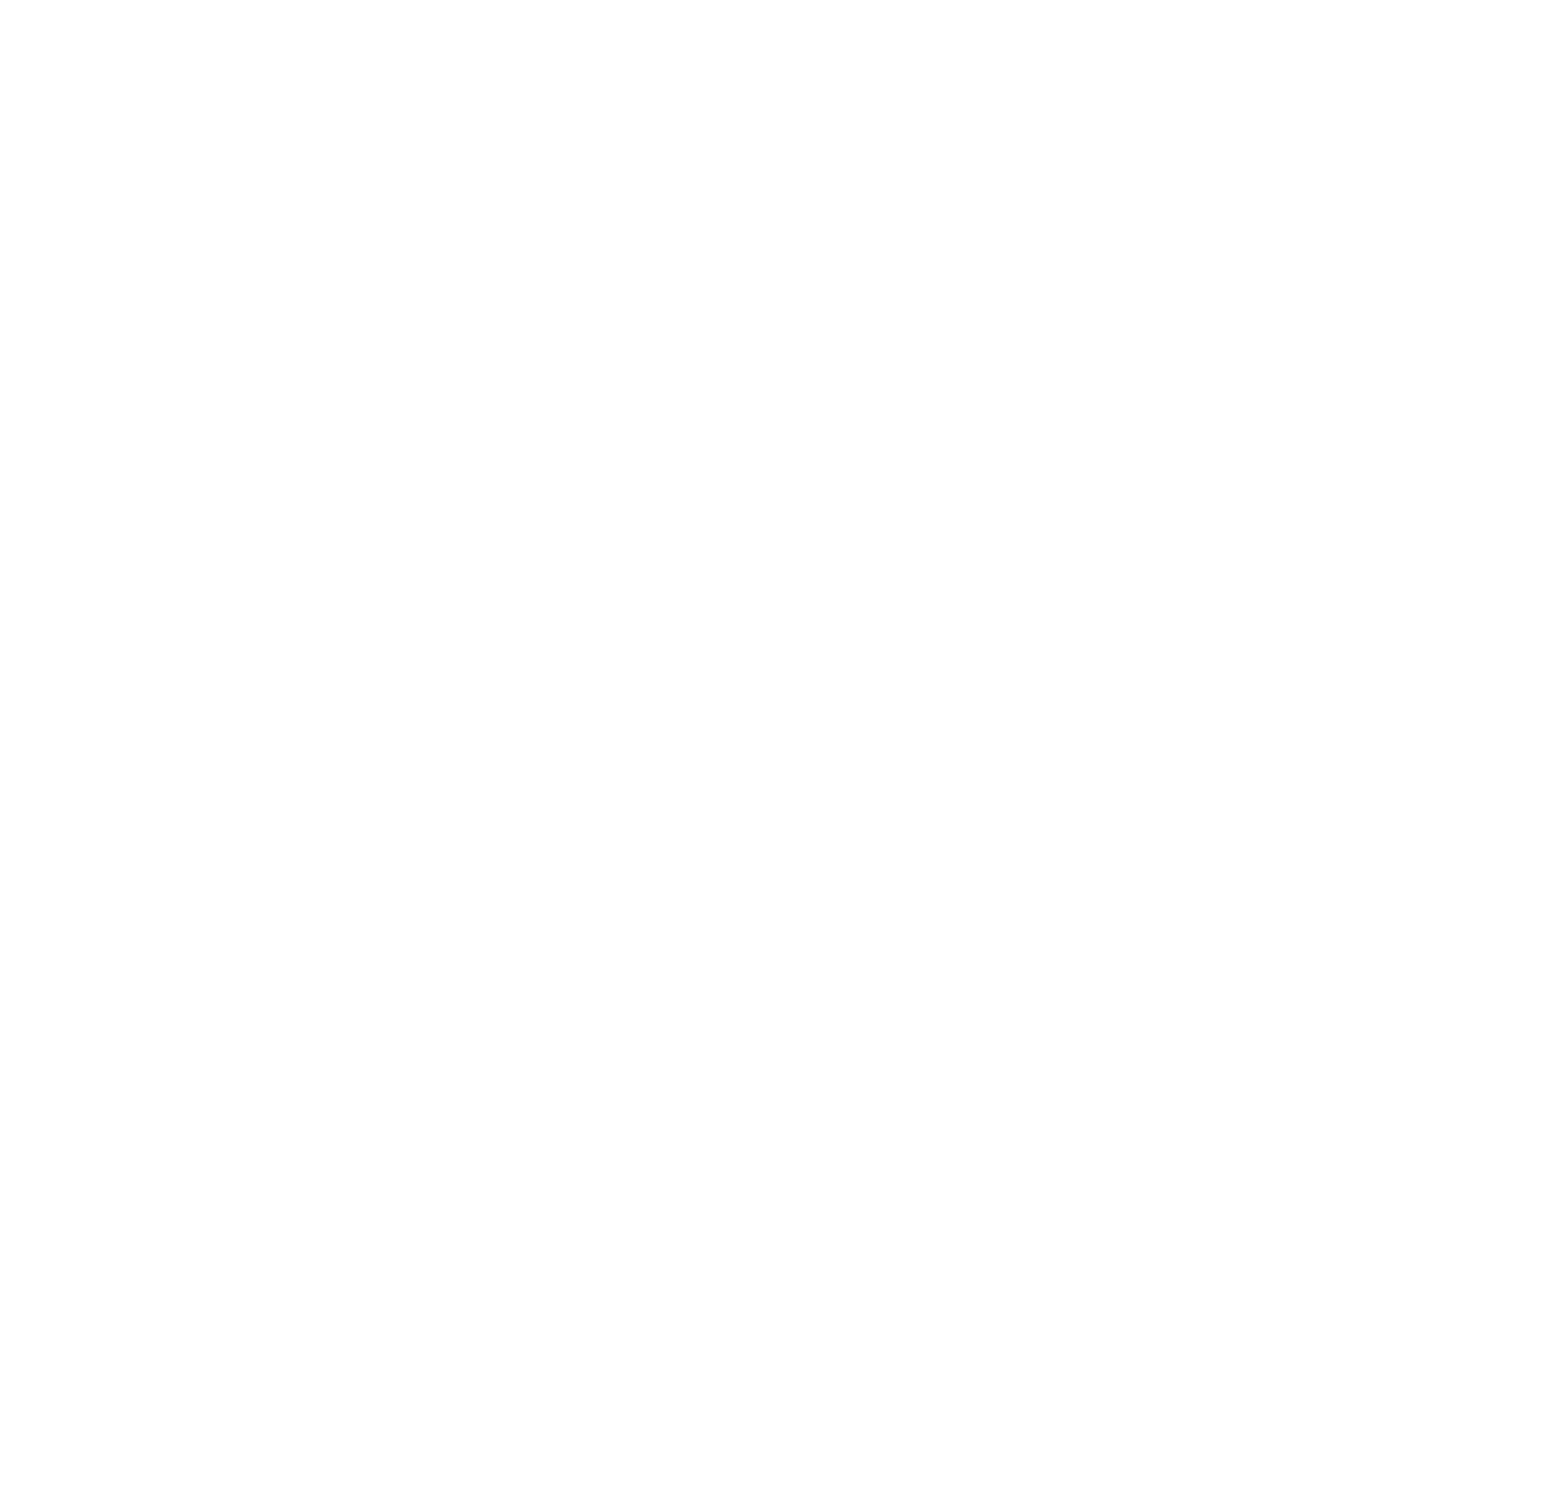 Maxis Berhad logo pour fonds sombres (PNG transparent)